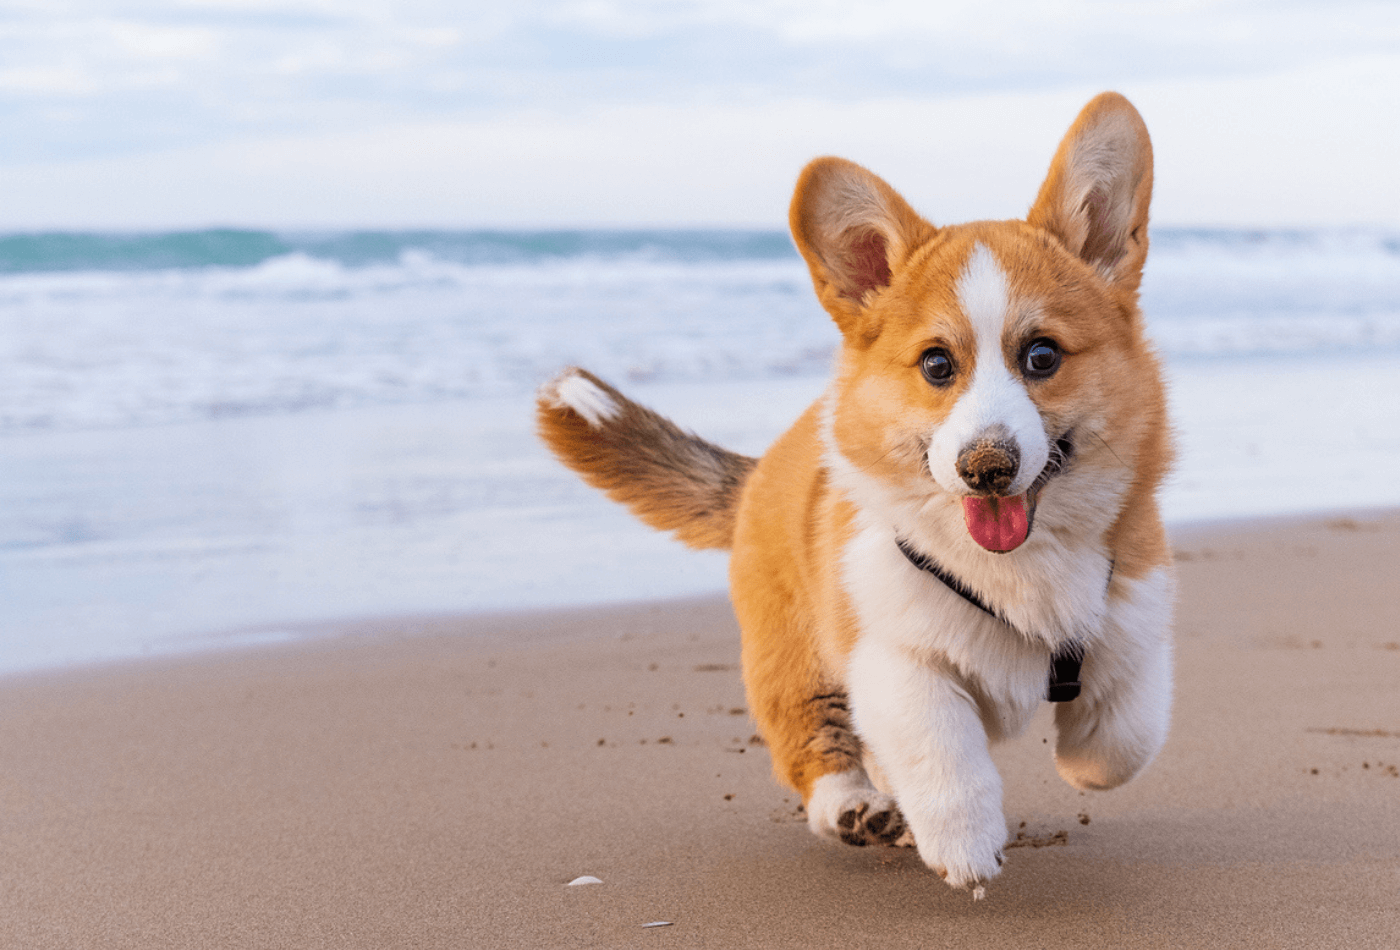 Dog running along beach